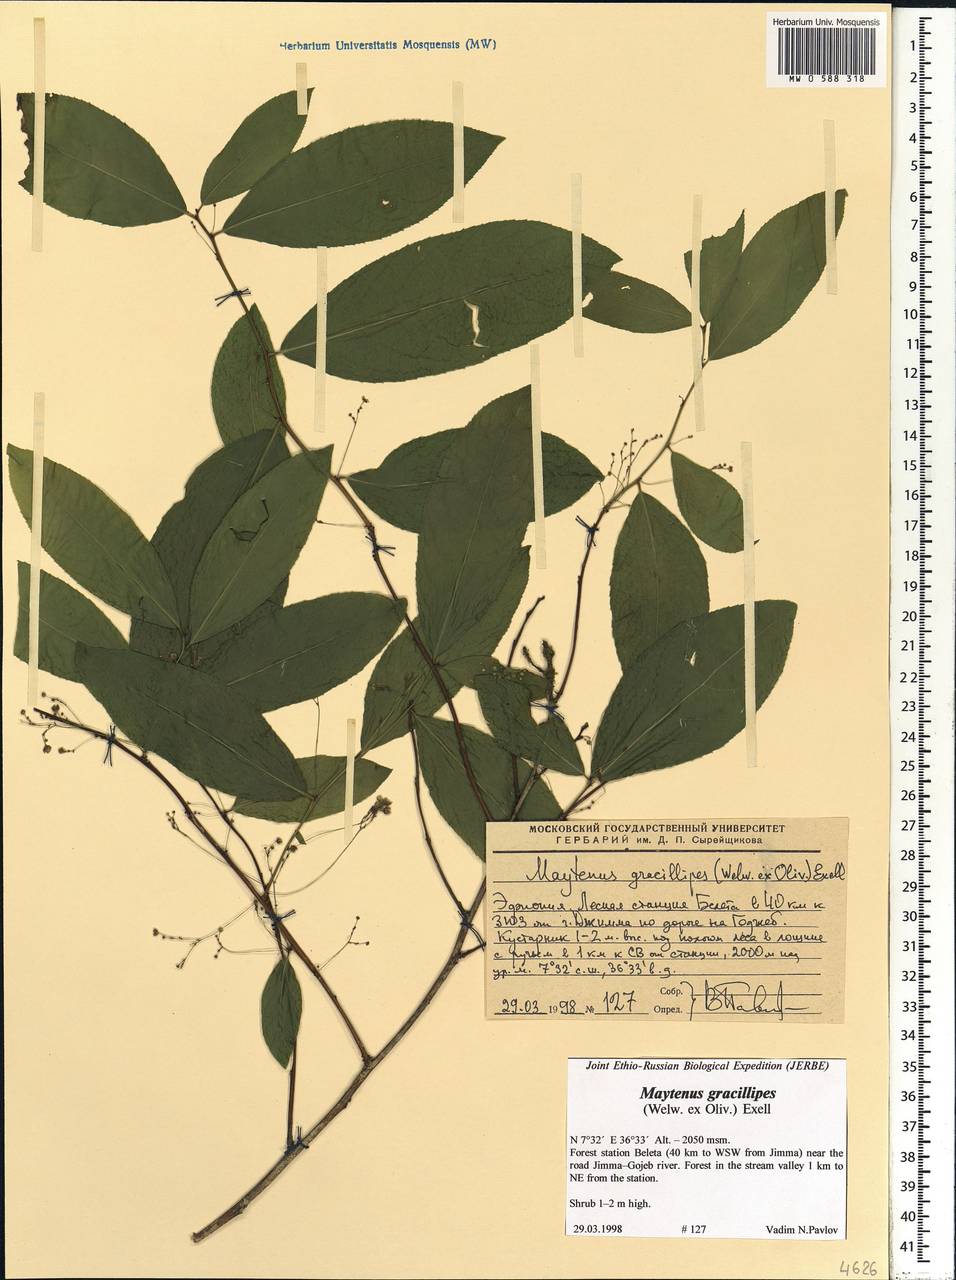 Gymnosporia gracilipes, Africa (AFR) (Ethiopia)